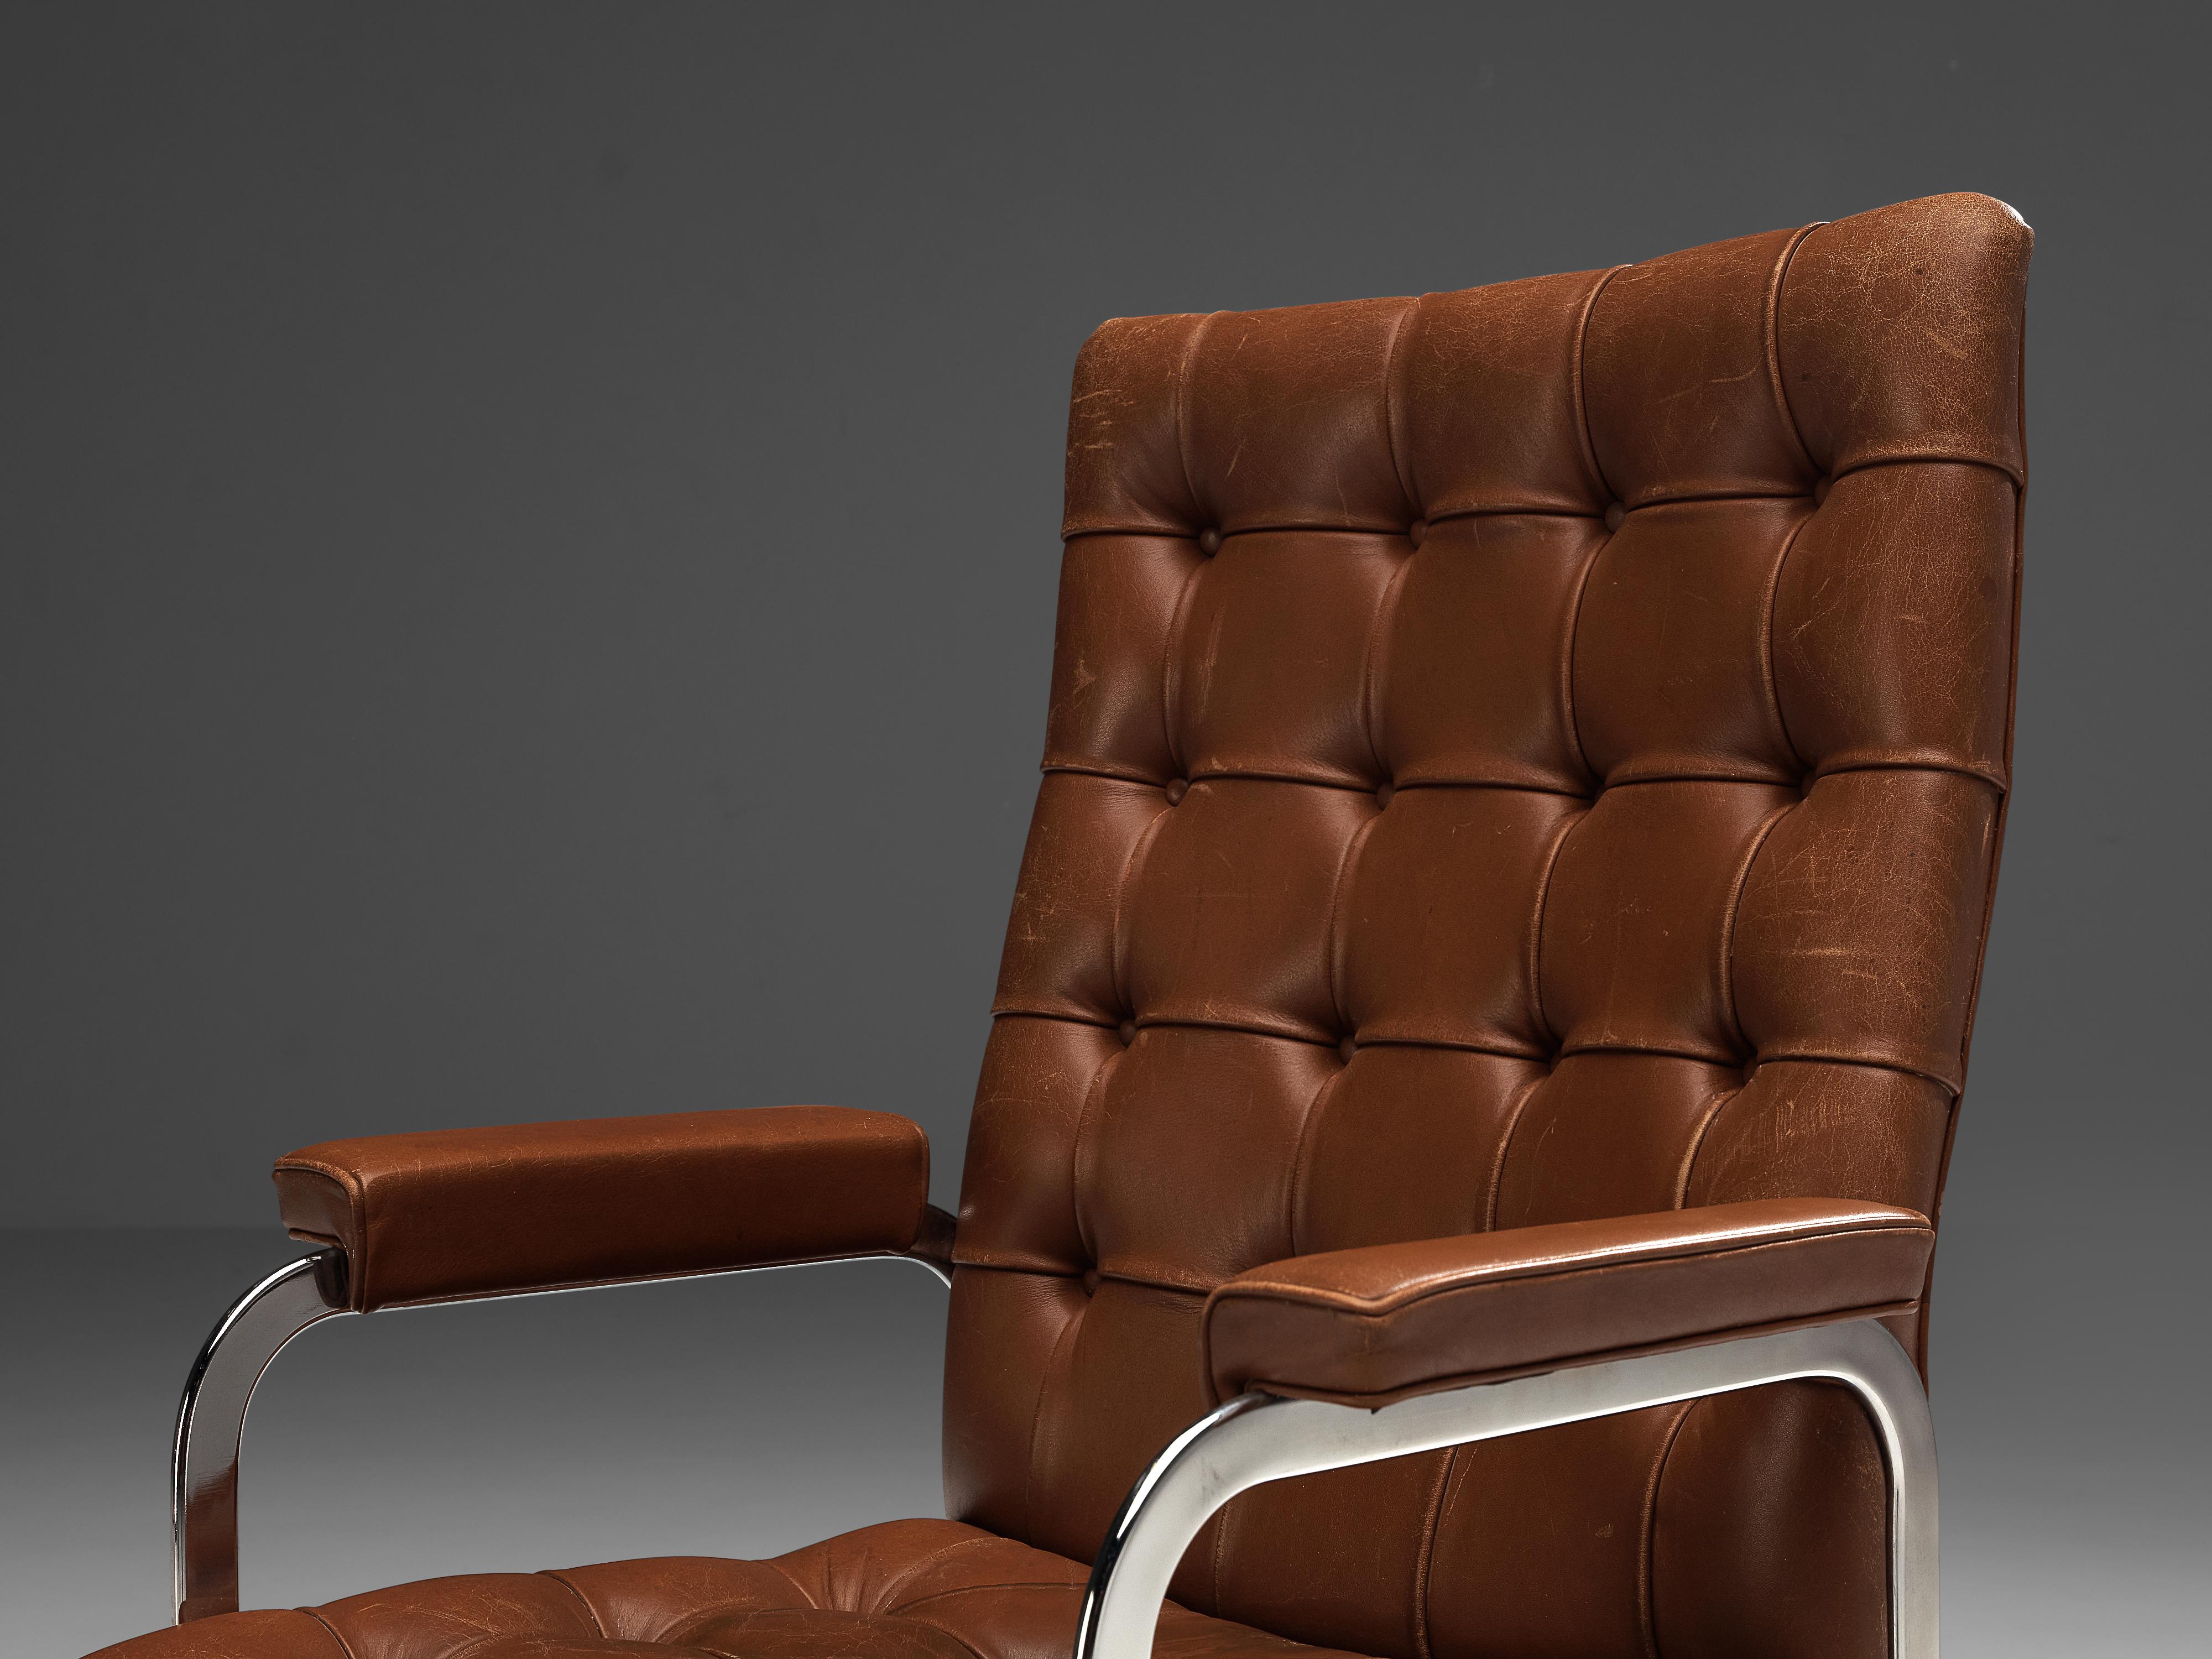 Steel Robert Haussmann for De Sede Armchairs 'RH-304' in Brown Leather